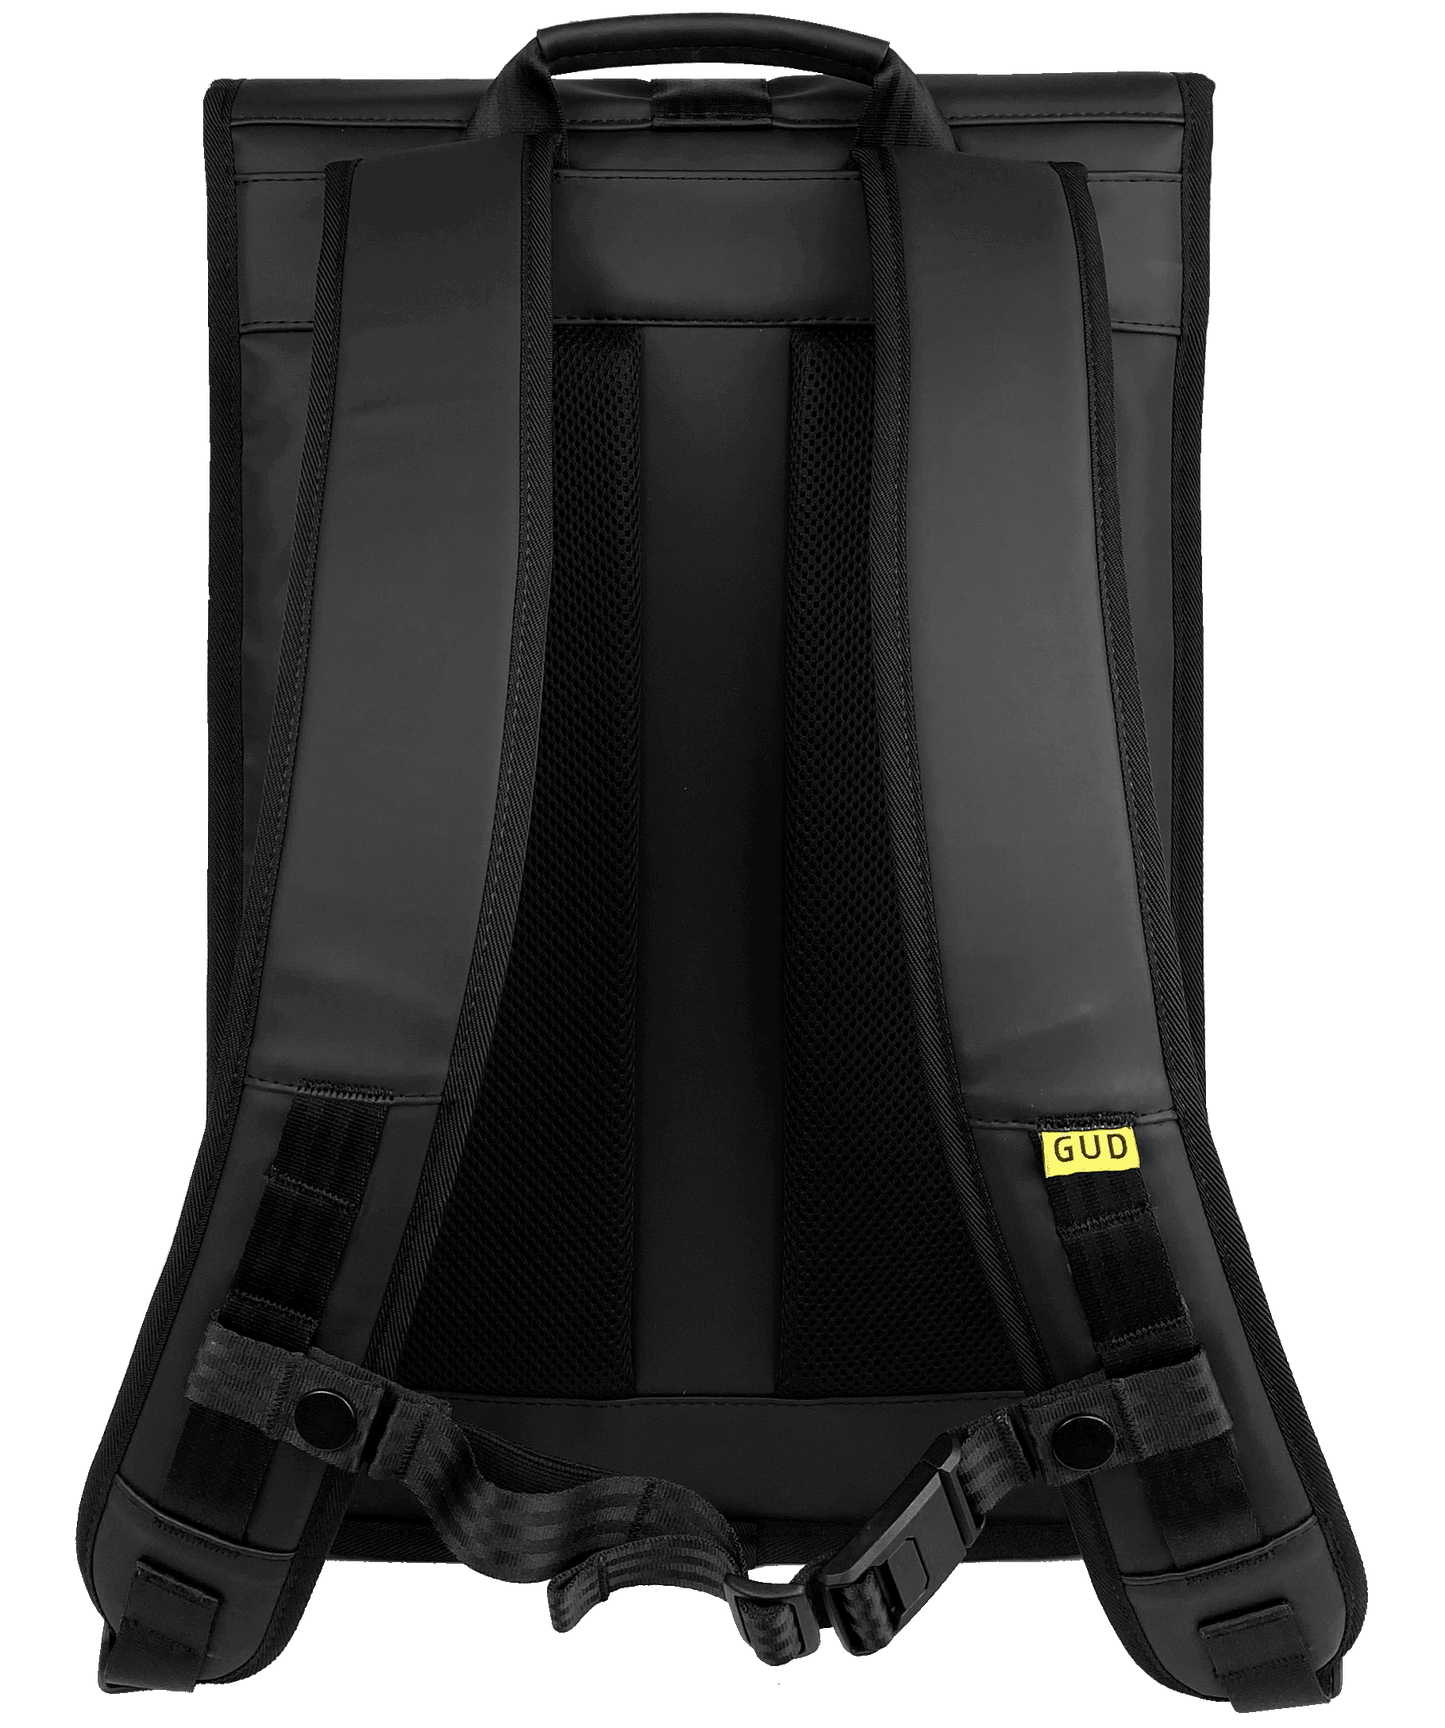 Task Backpack by GUD